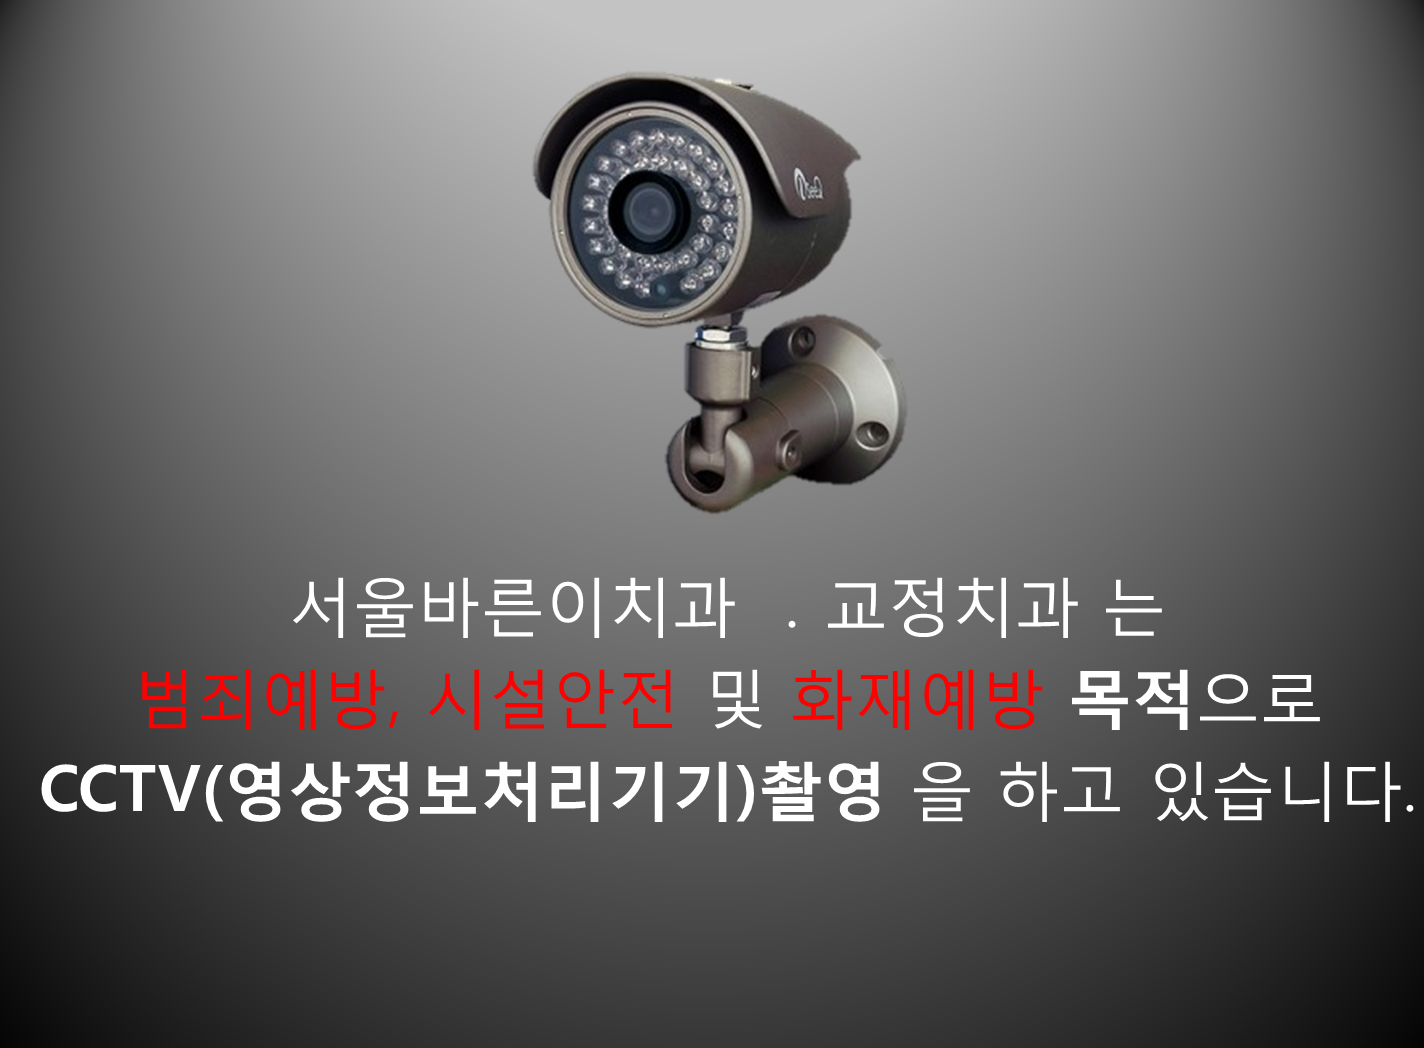 CCTV 공지문.png